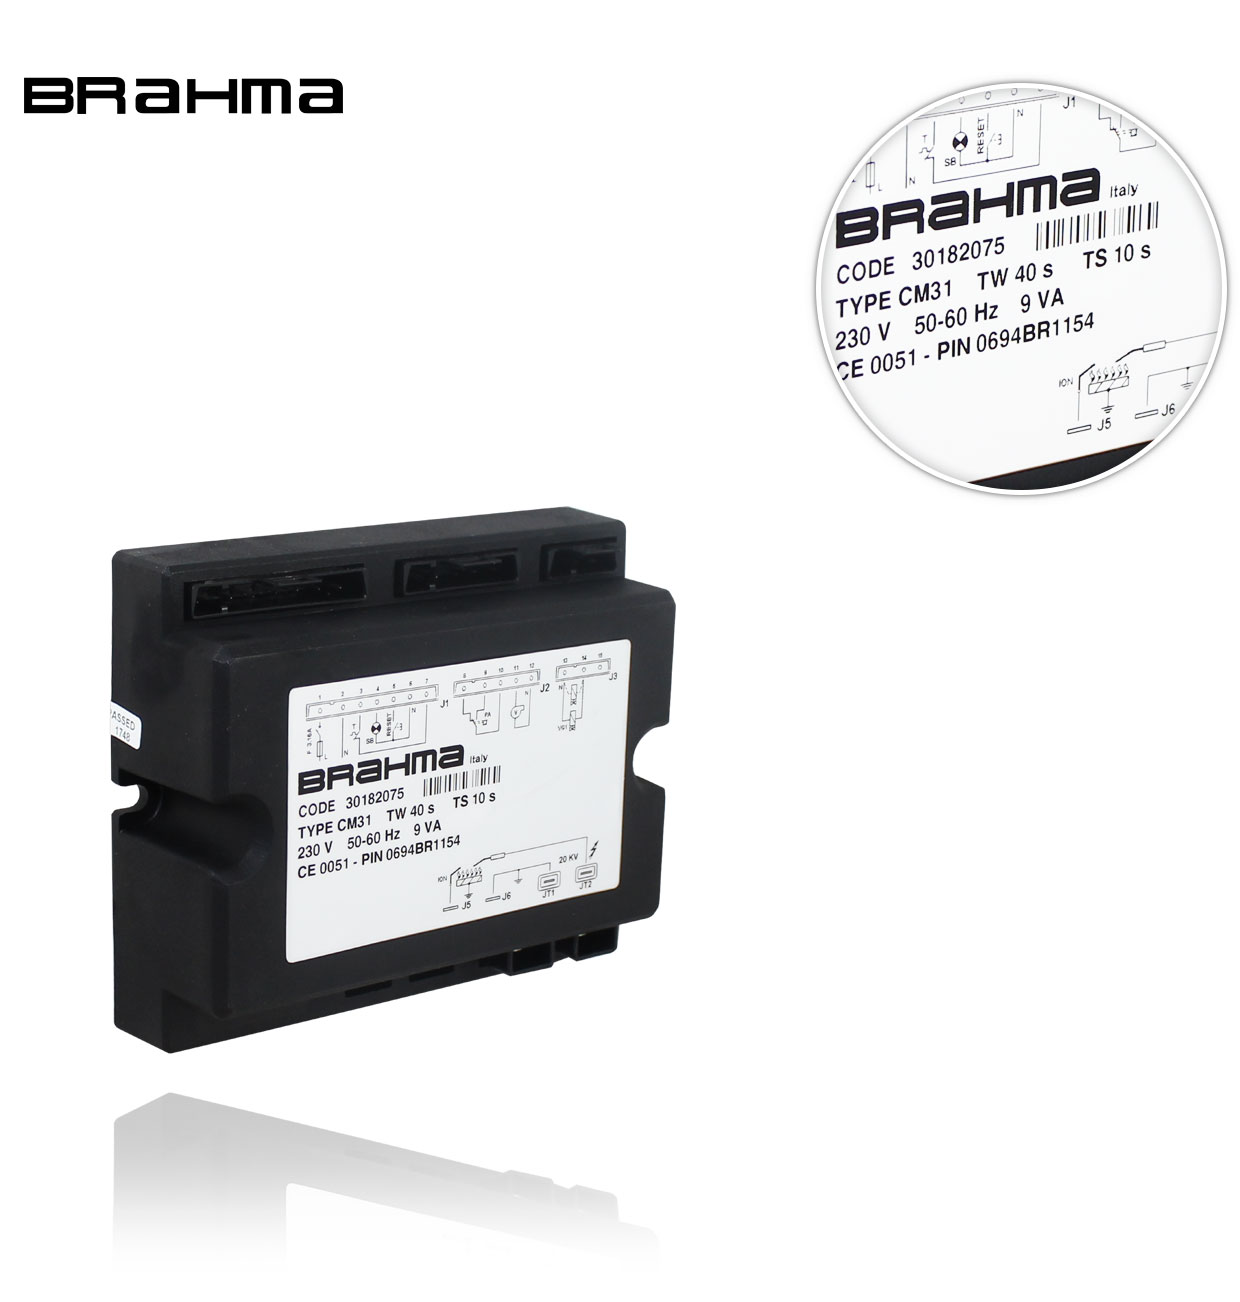 CM 31   TW40  TS10  BRAHMA MICROFLAT GAS CONTROL BOX